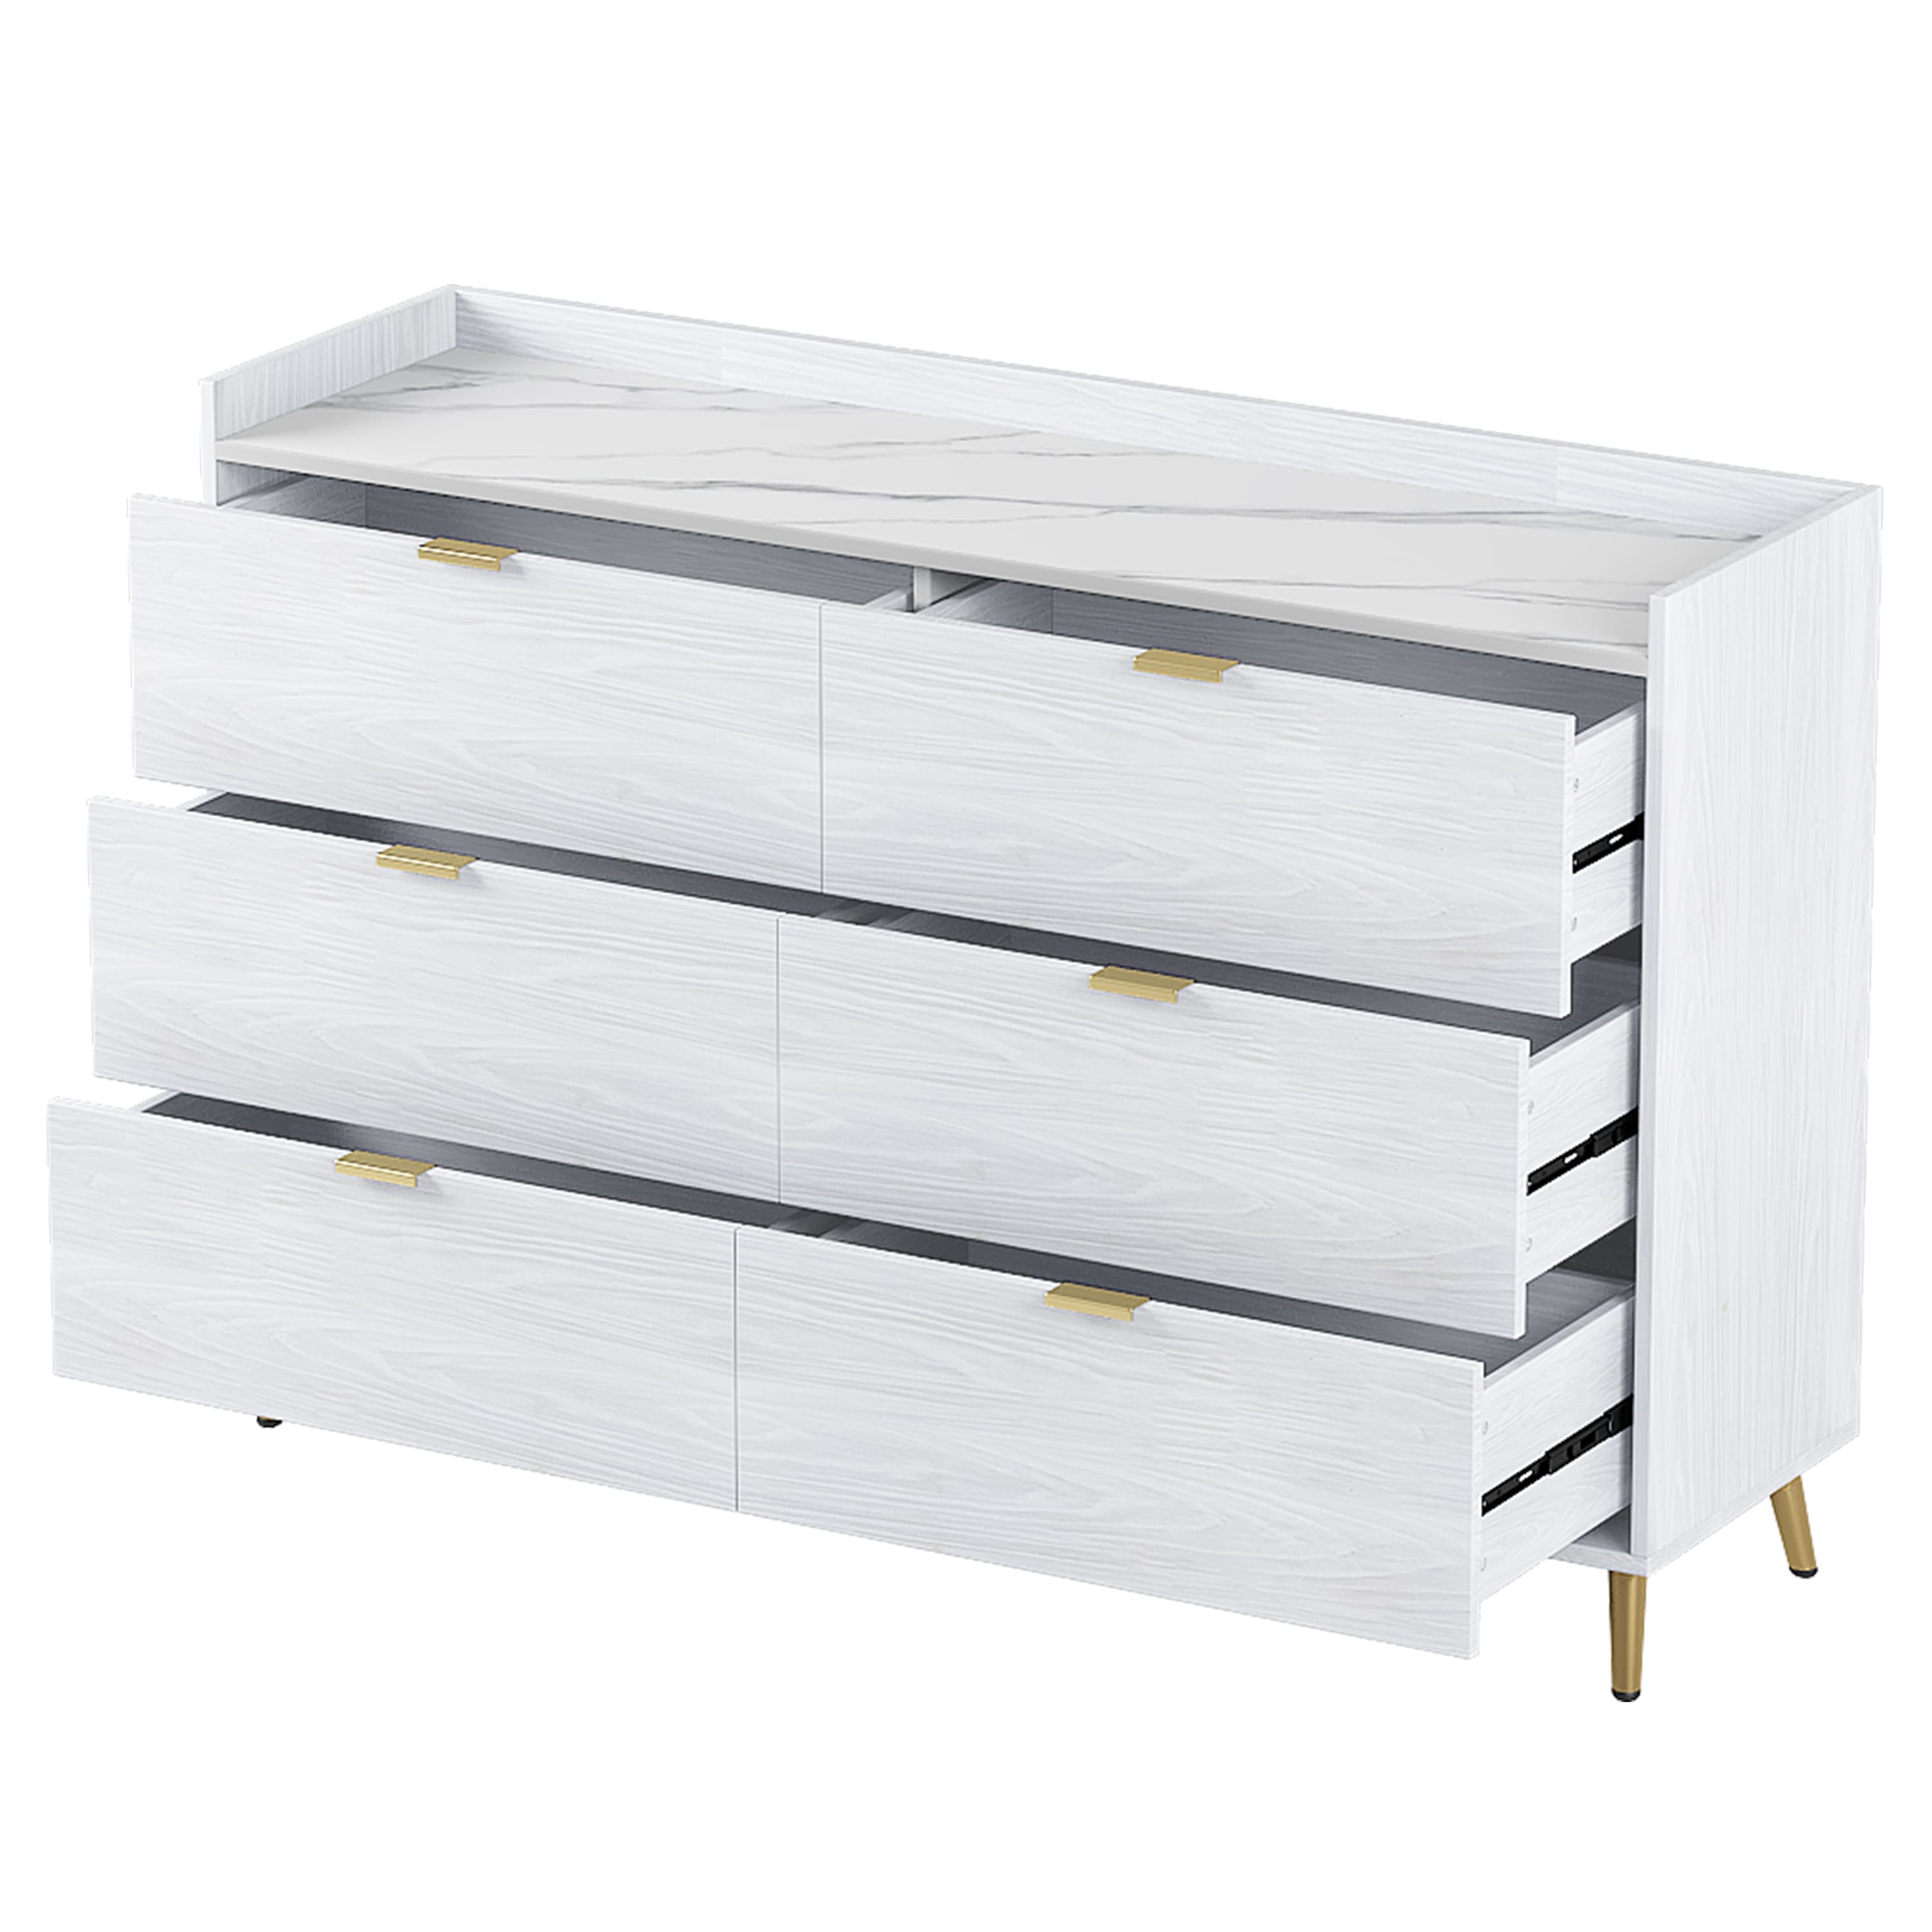 Long 6 Drawer Dresser with Marbling Worktop - Bed Bath & Beyond - 39911265